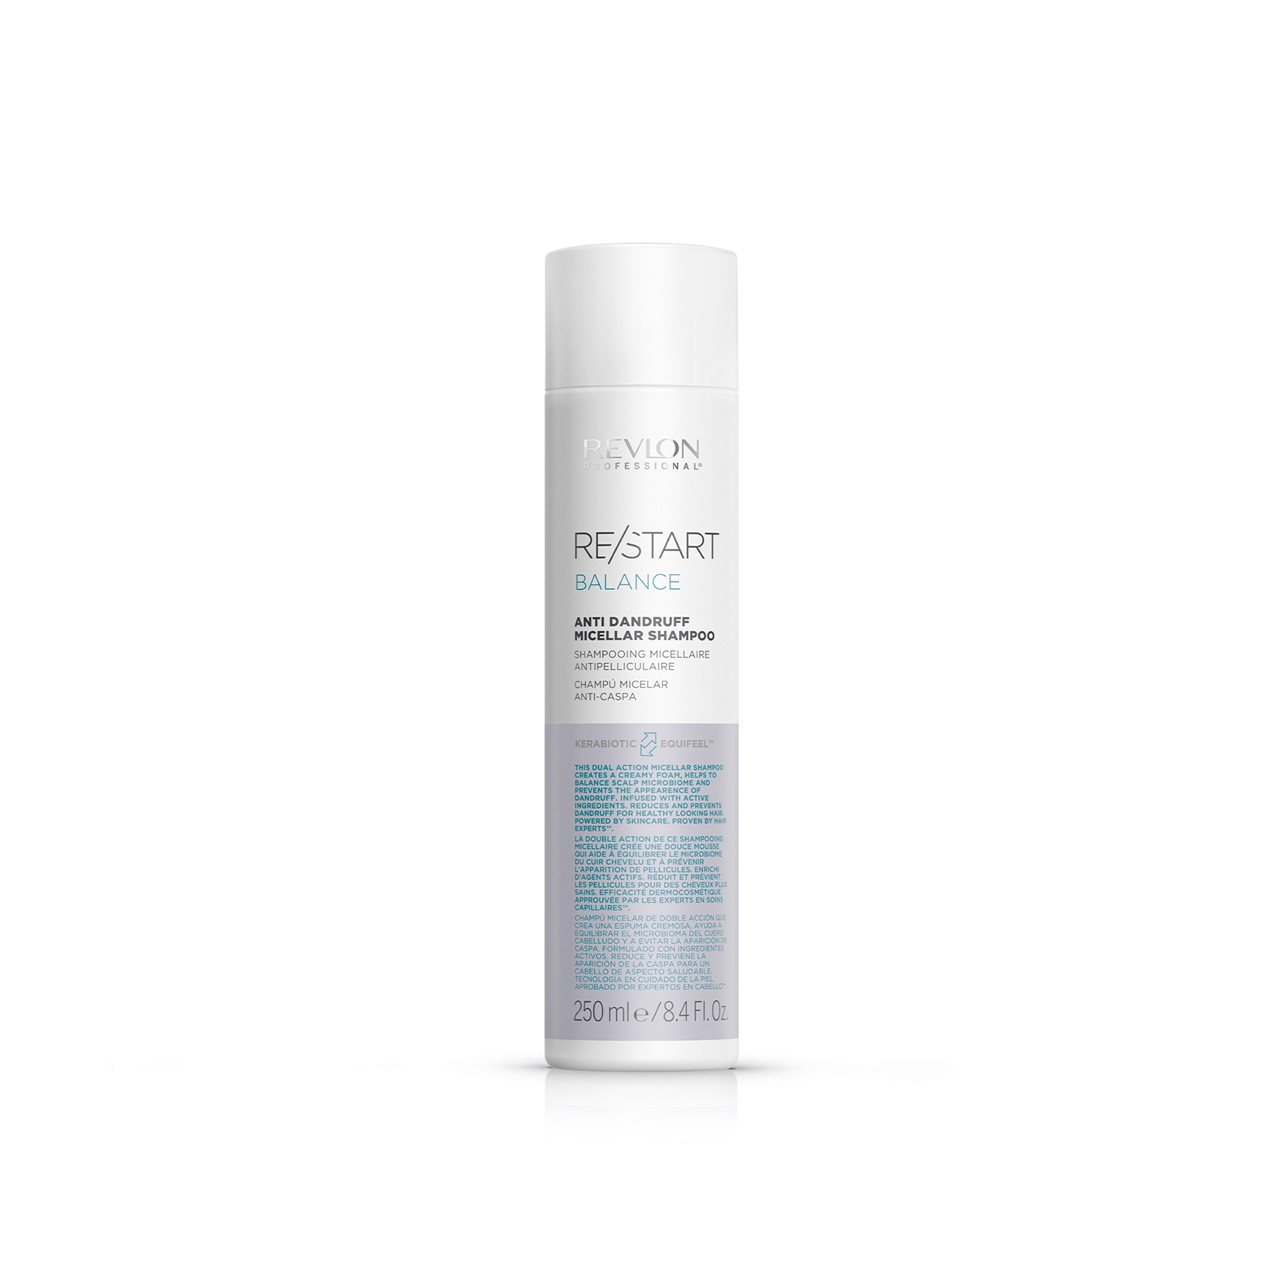 Revlon Professional Re/Start Balance Anti-Dandruff Shampoo 250ml (8.45fl oz)